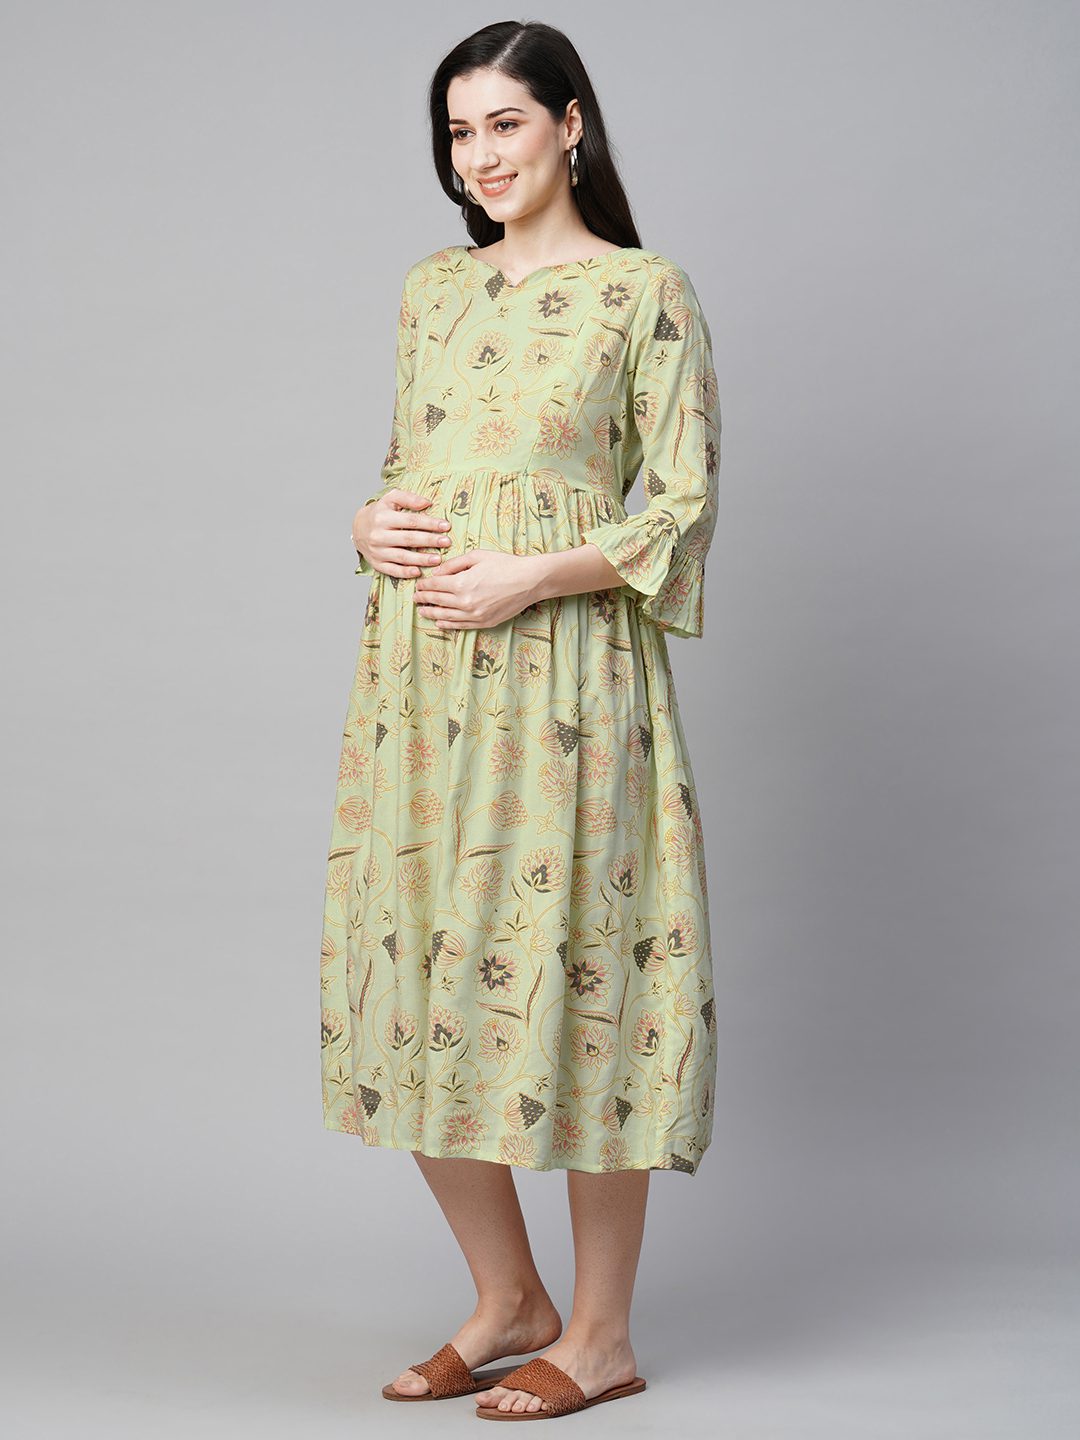 Fashiln Woman P ure Cotton Maternity Gown/Maternity wear/Feeding